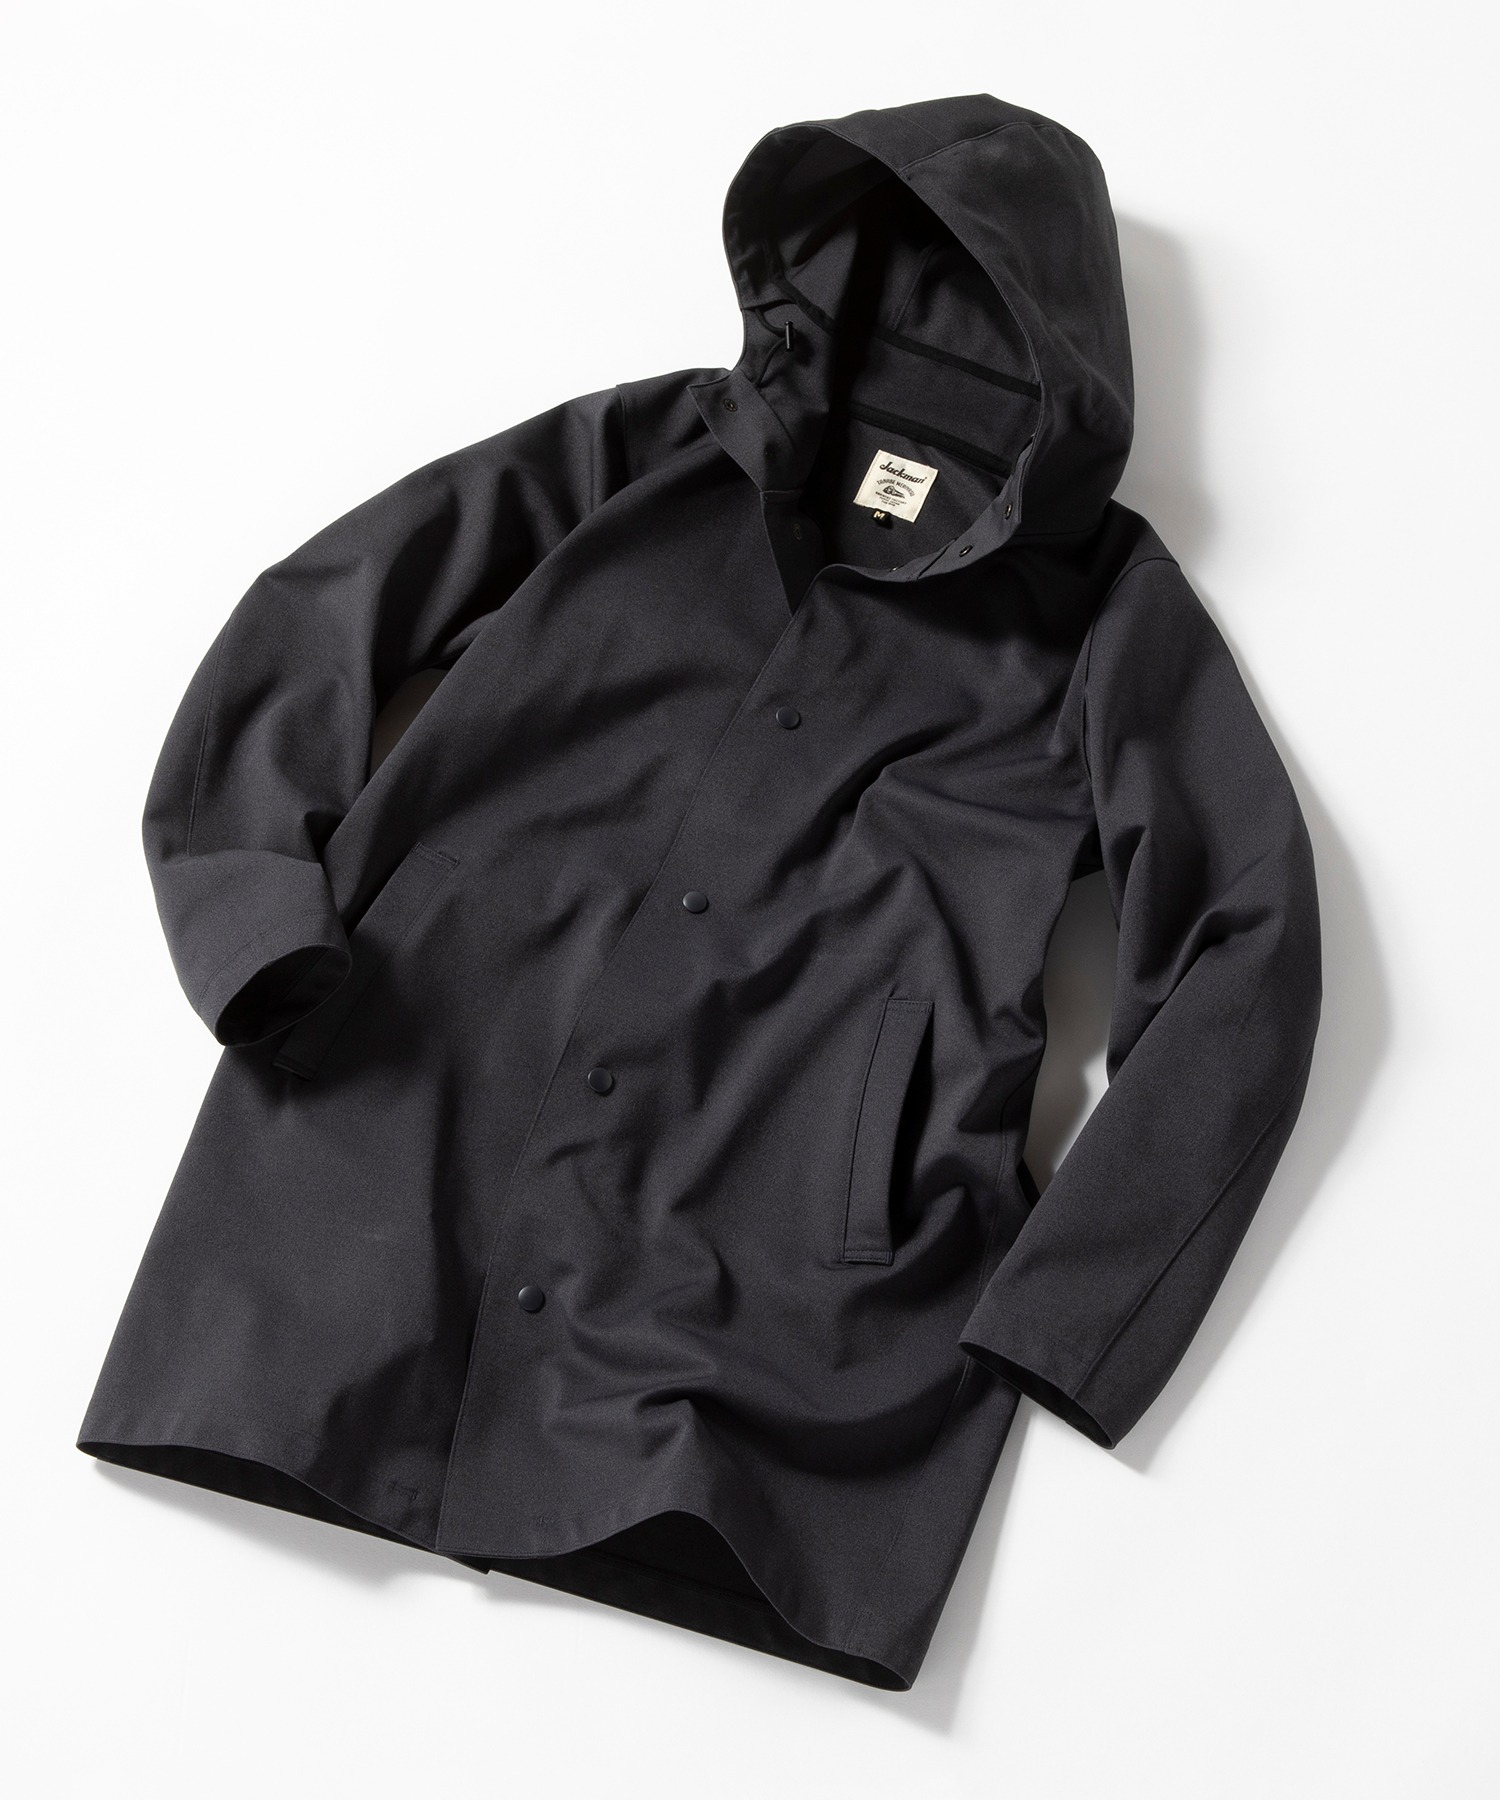 JackmanHigh-density 日本初の Jersey 超安い Coat